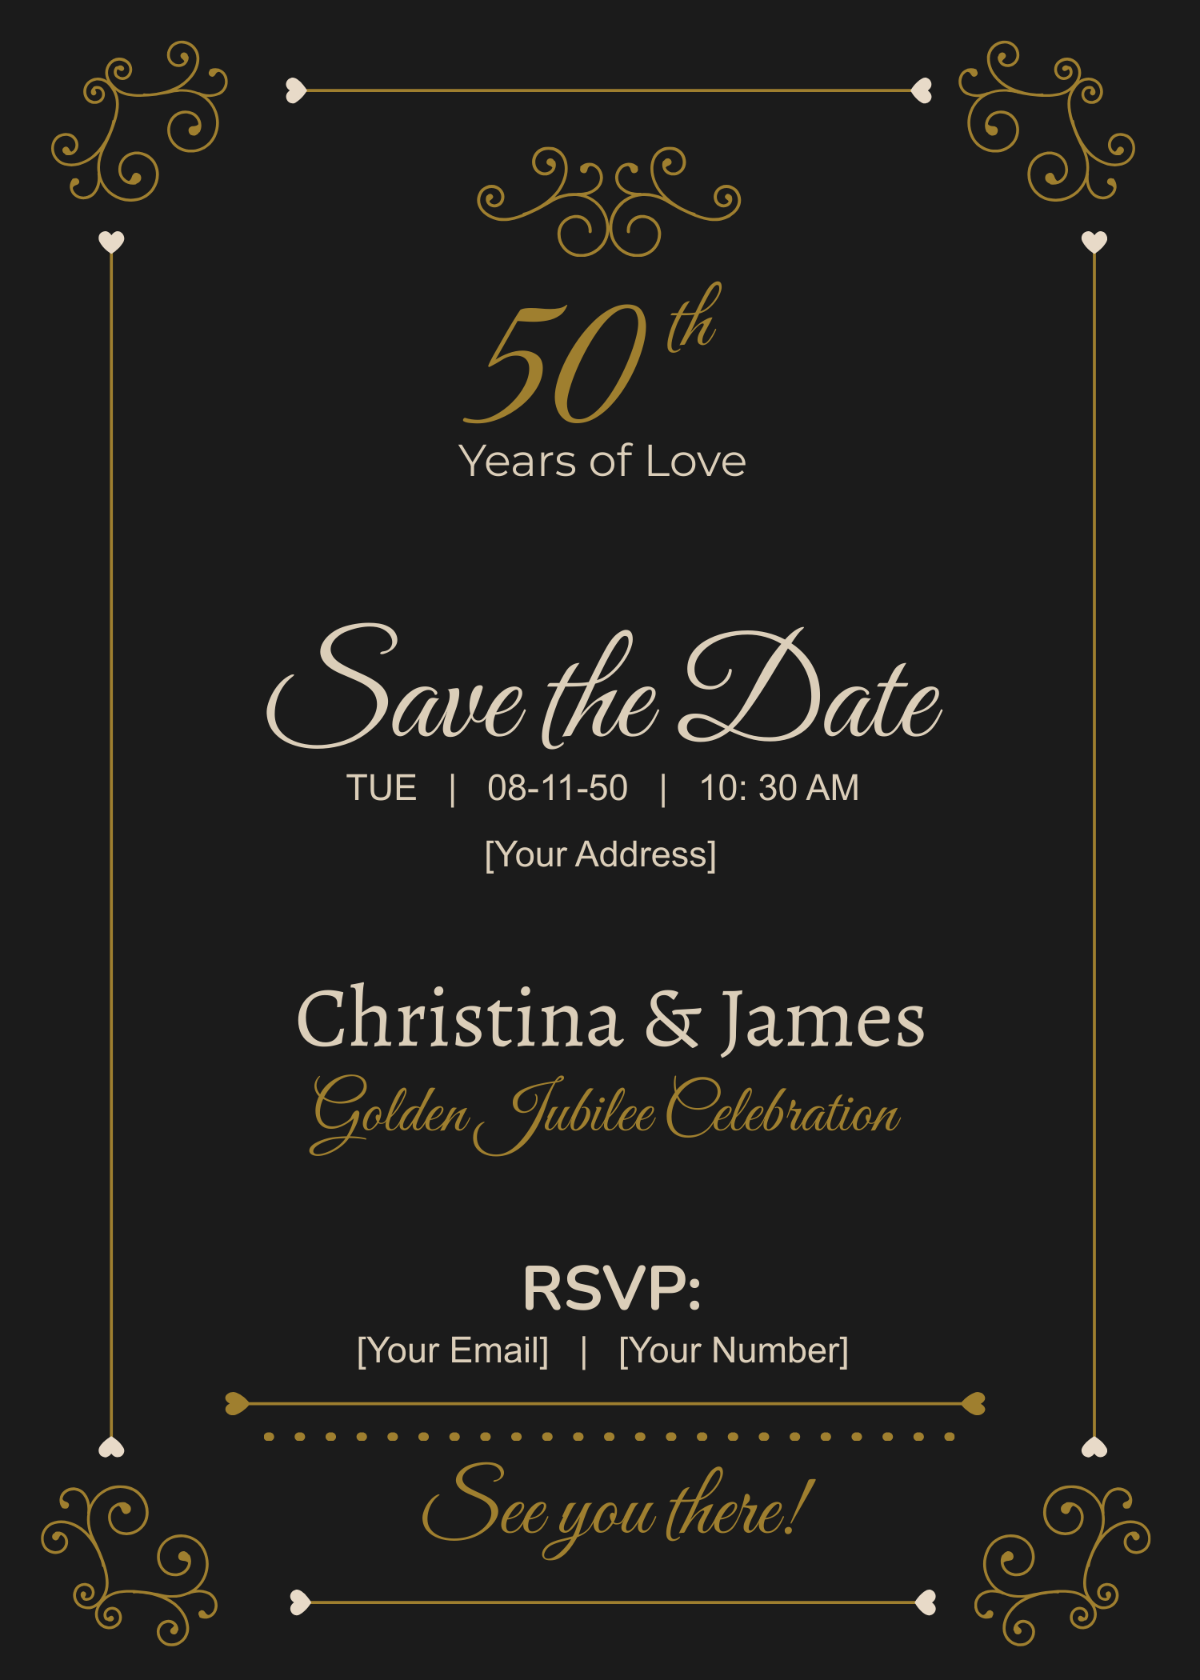 50th Anniversary Save the Date Invitation